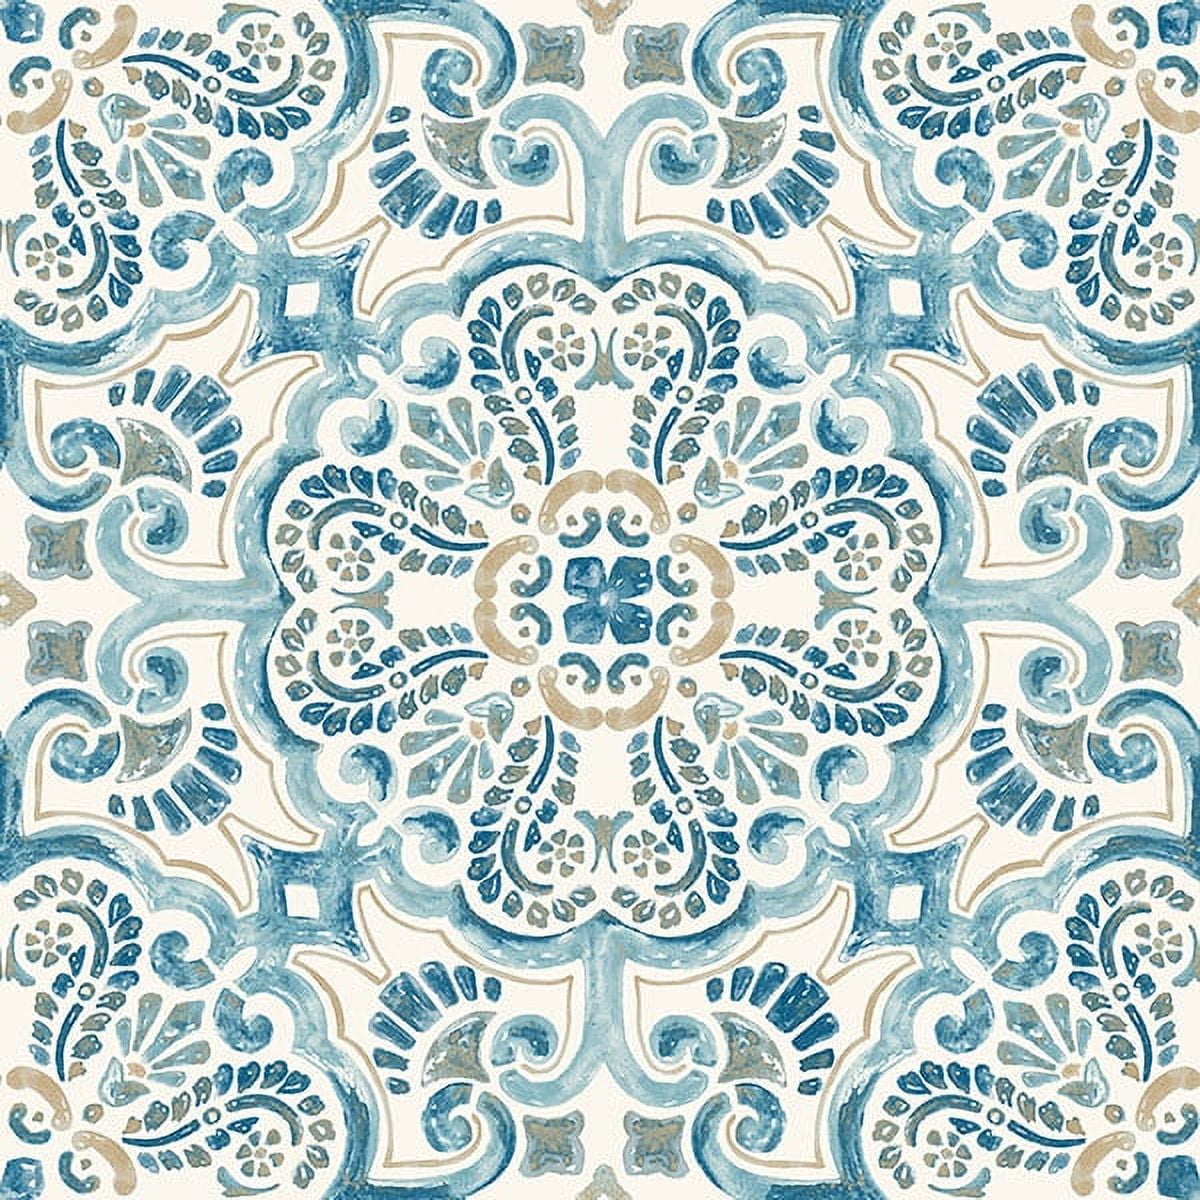 Fp2477 Fontaine Peel & Stick Floor Tiles - Blue, Tan & White